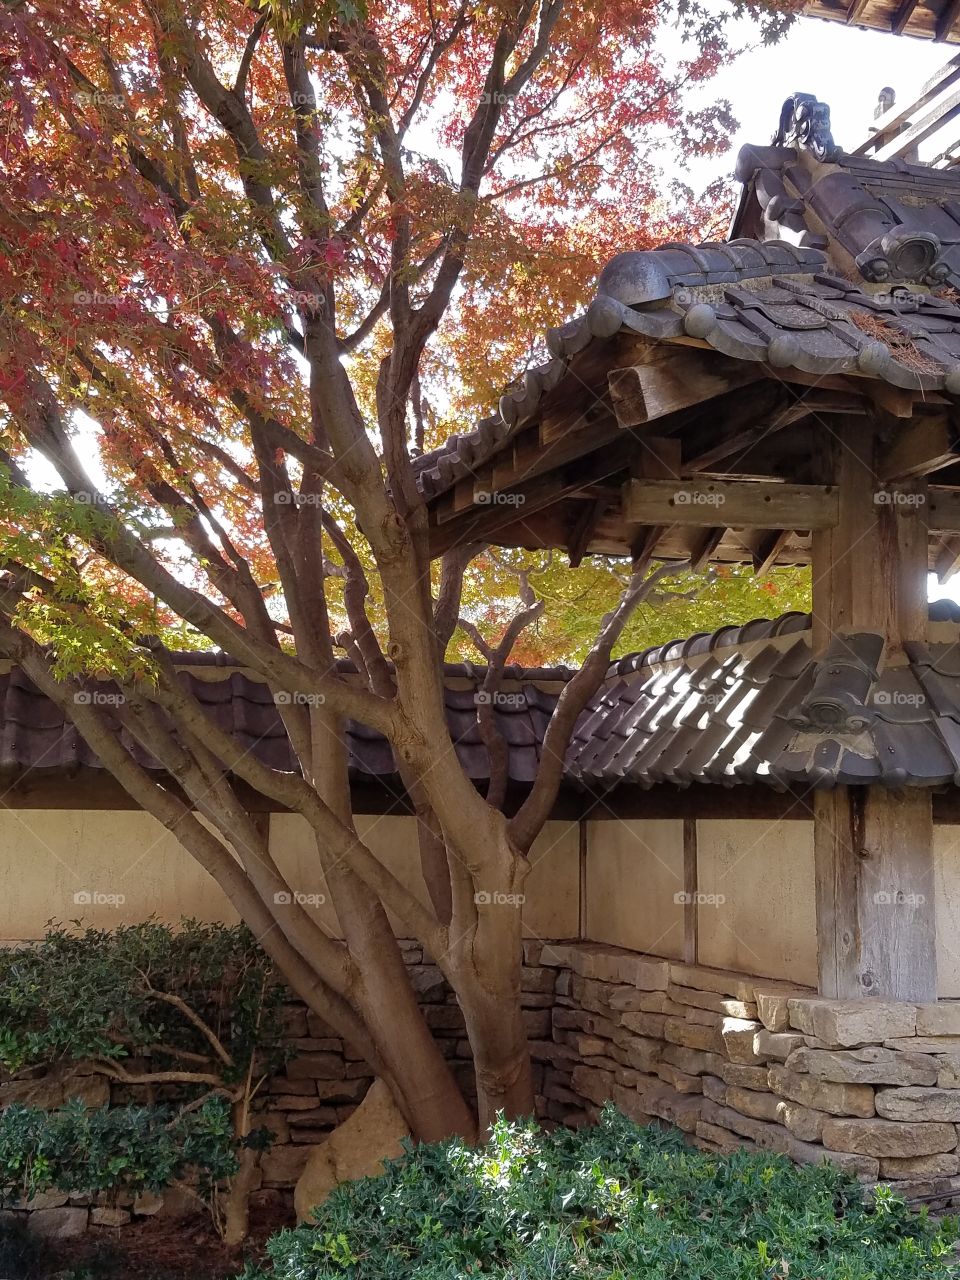 Japanese Gardens at Fort Worth botanical